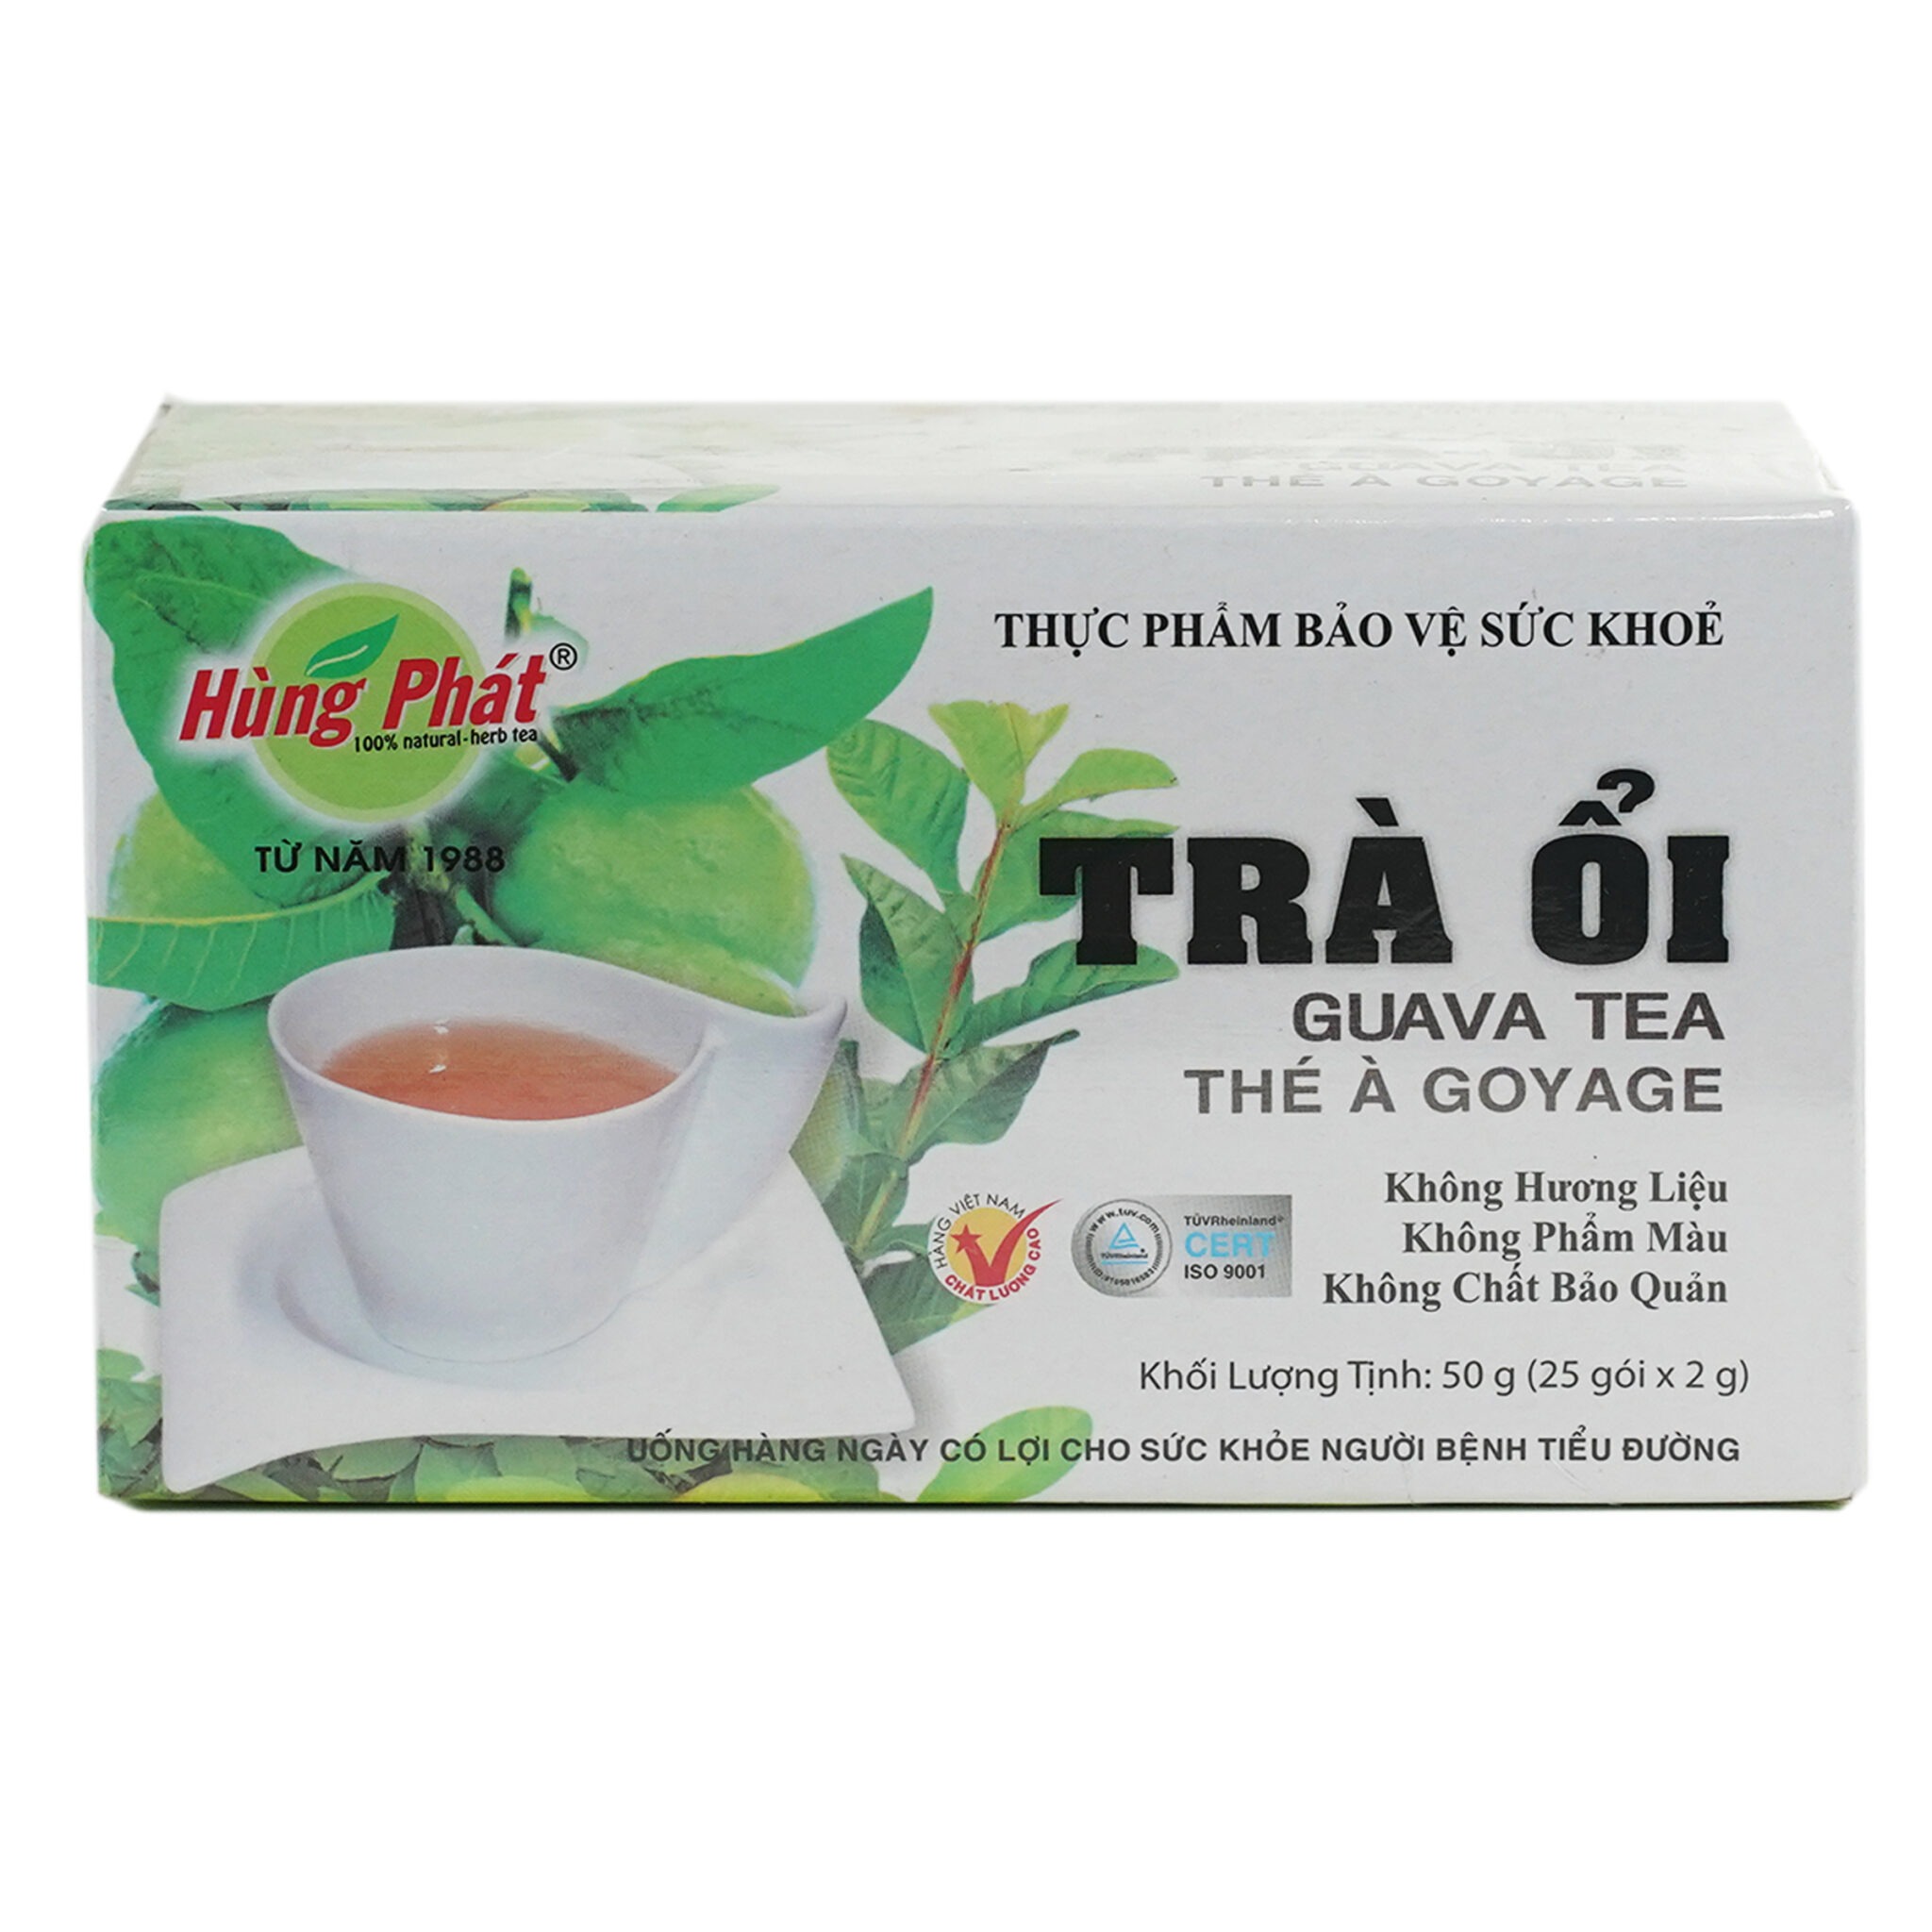 Hung Phat Guava Tea (Tra Oi) 1.75oz x25 sachet, 10-Boxes (10-Packs ...